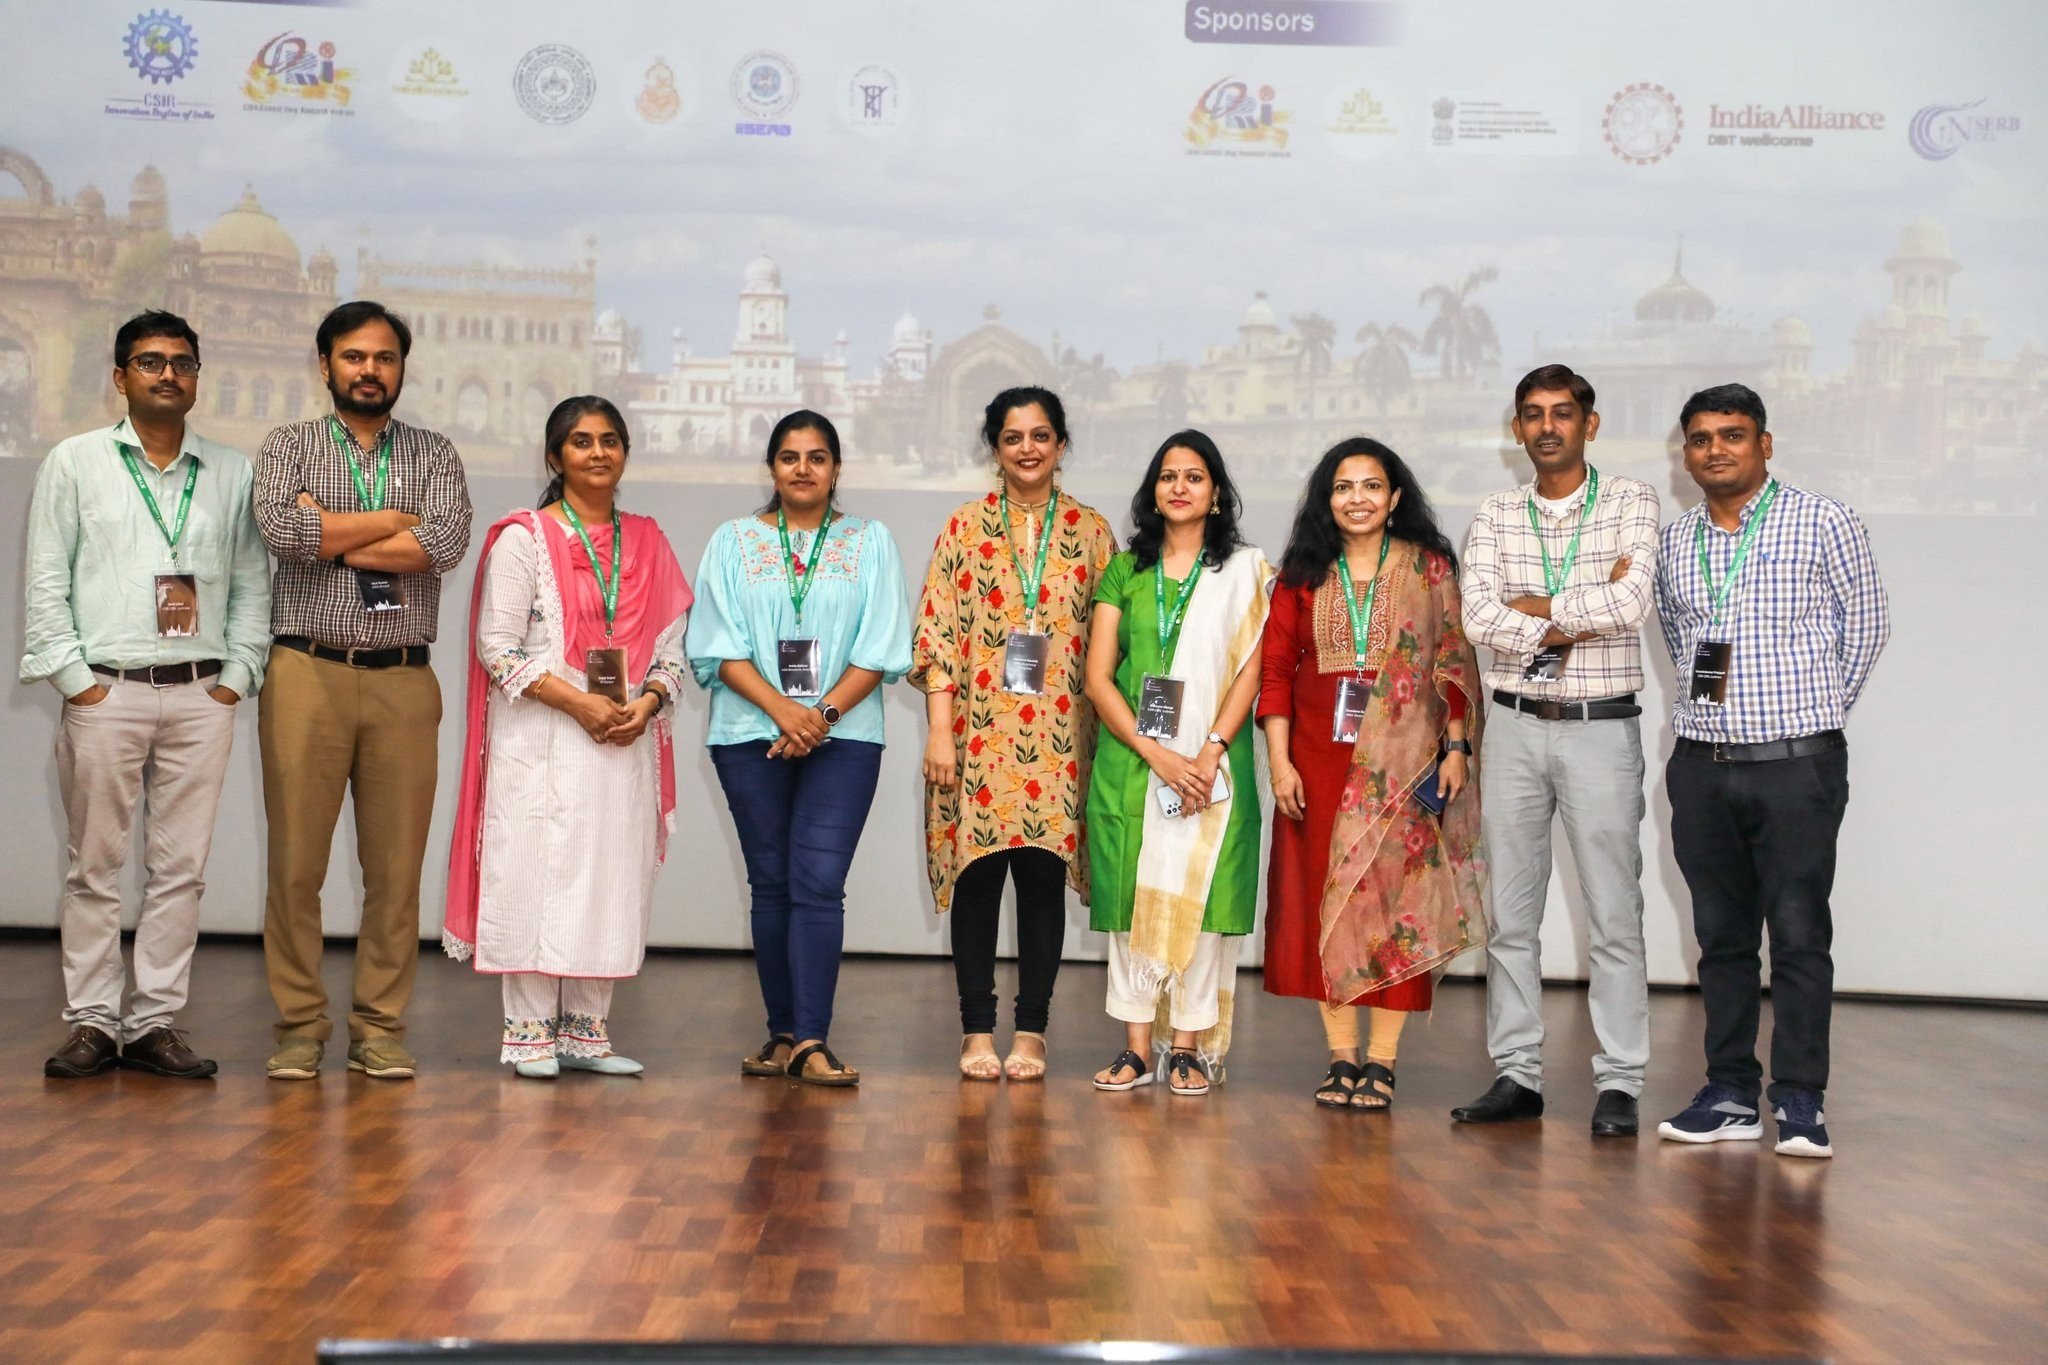 IndiaBioscience team with the organisers of RYIM Lucknow. Credits:Mr. Ravindranath Londhe and Mr. Kazim Raza. Left to right : Amit Lahiri, Atul Kumar, Anjali Bajpai, Ankita Rathore, Karishma Kaushik, Bhawana George, Chandana Basu, Jalaj Gupta, Virendra Kumar Prajapati.